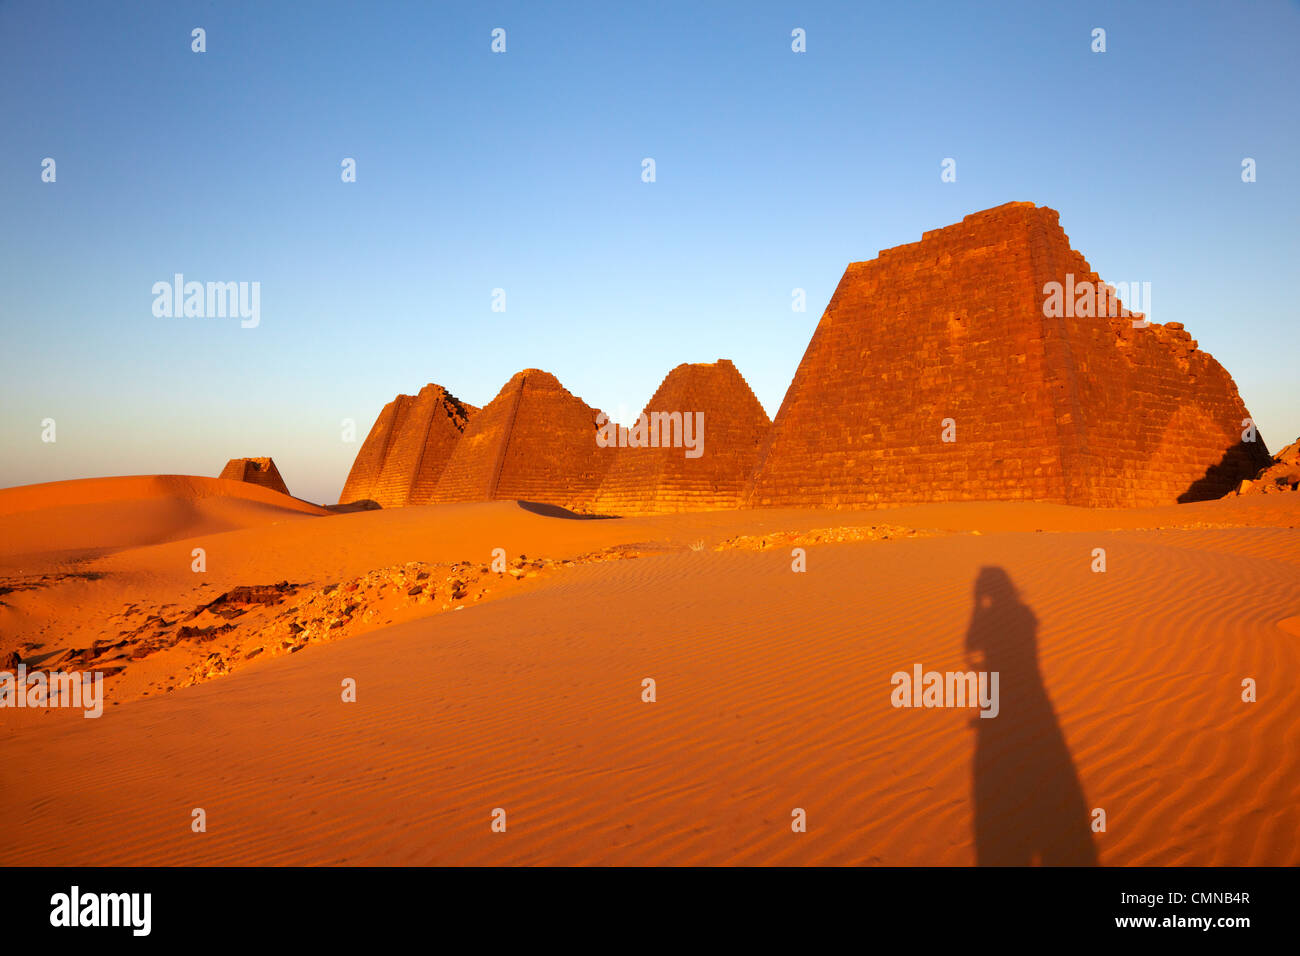 The Pyramids Of Meroe Northern Sudan Africa Stock Photo Alamy